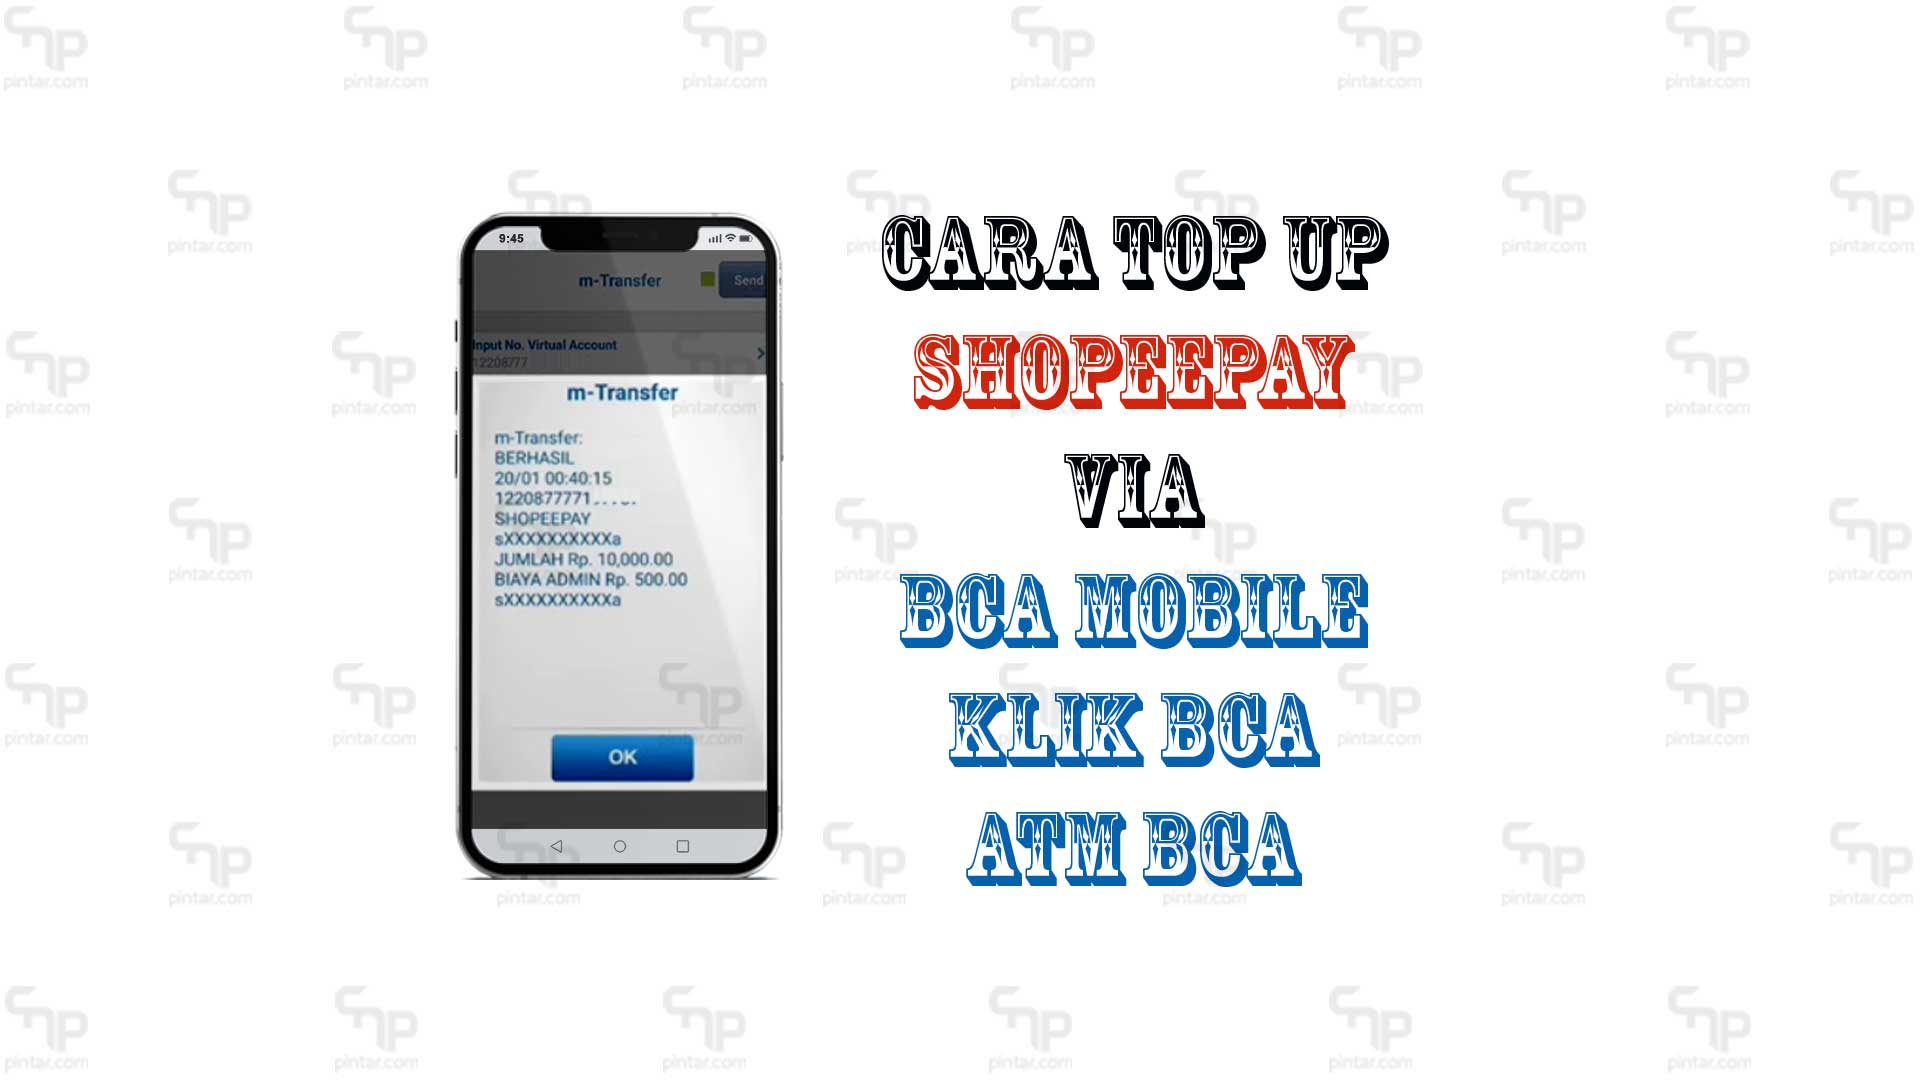 Cara-top-up-shopeepay-via-bca